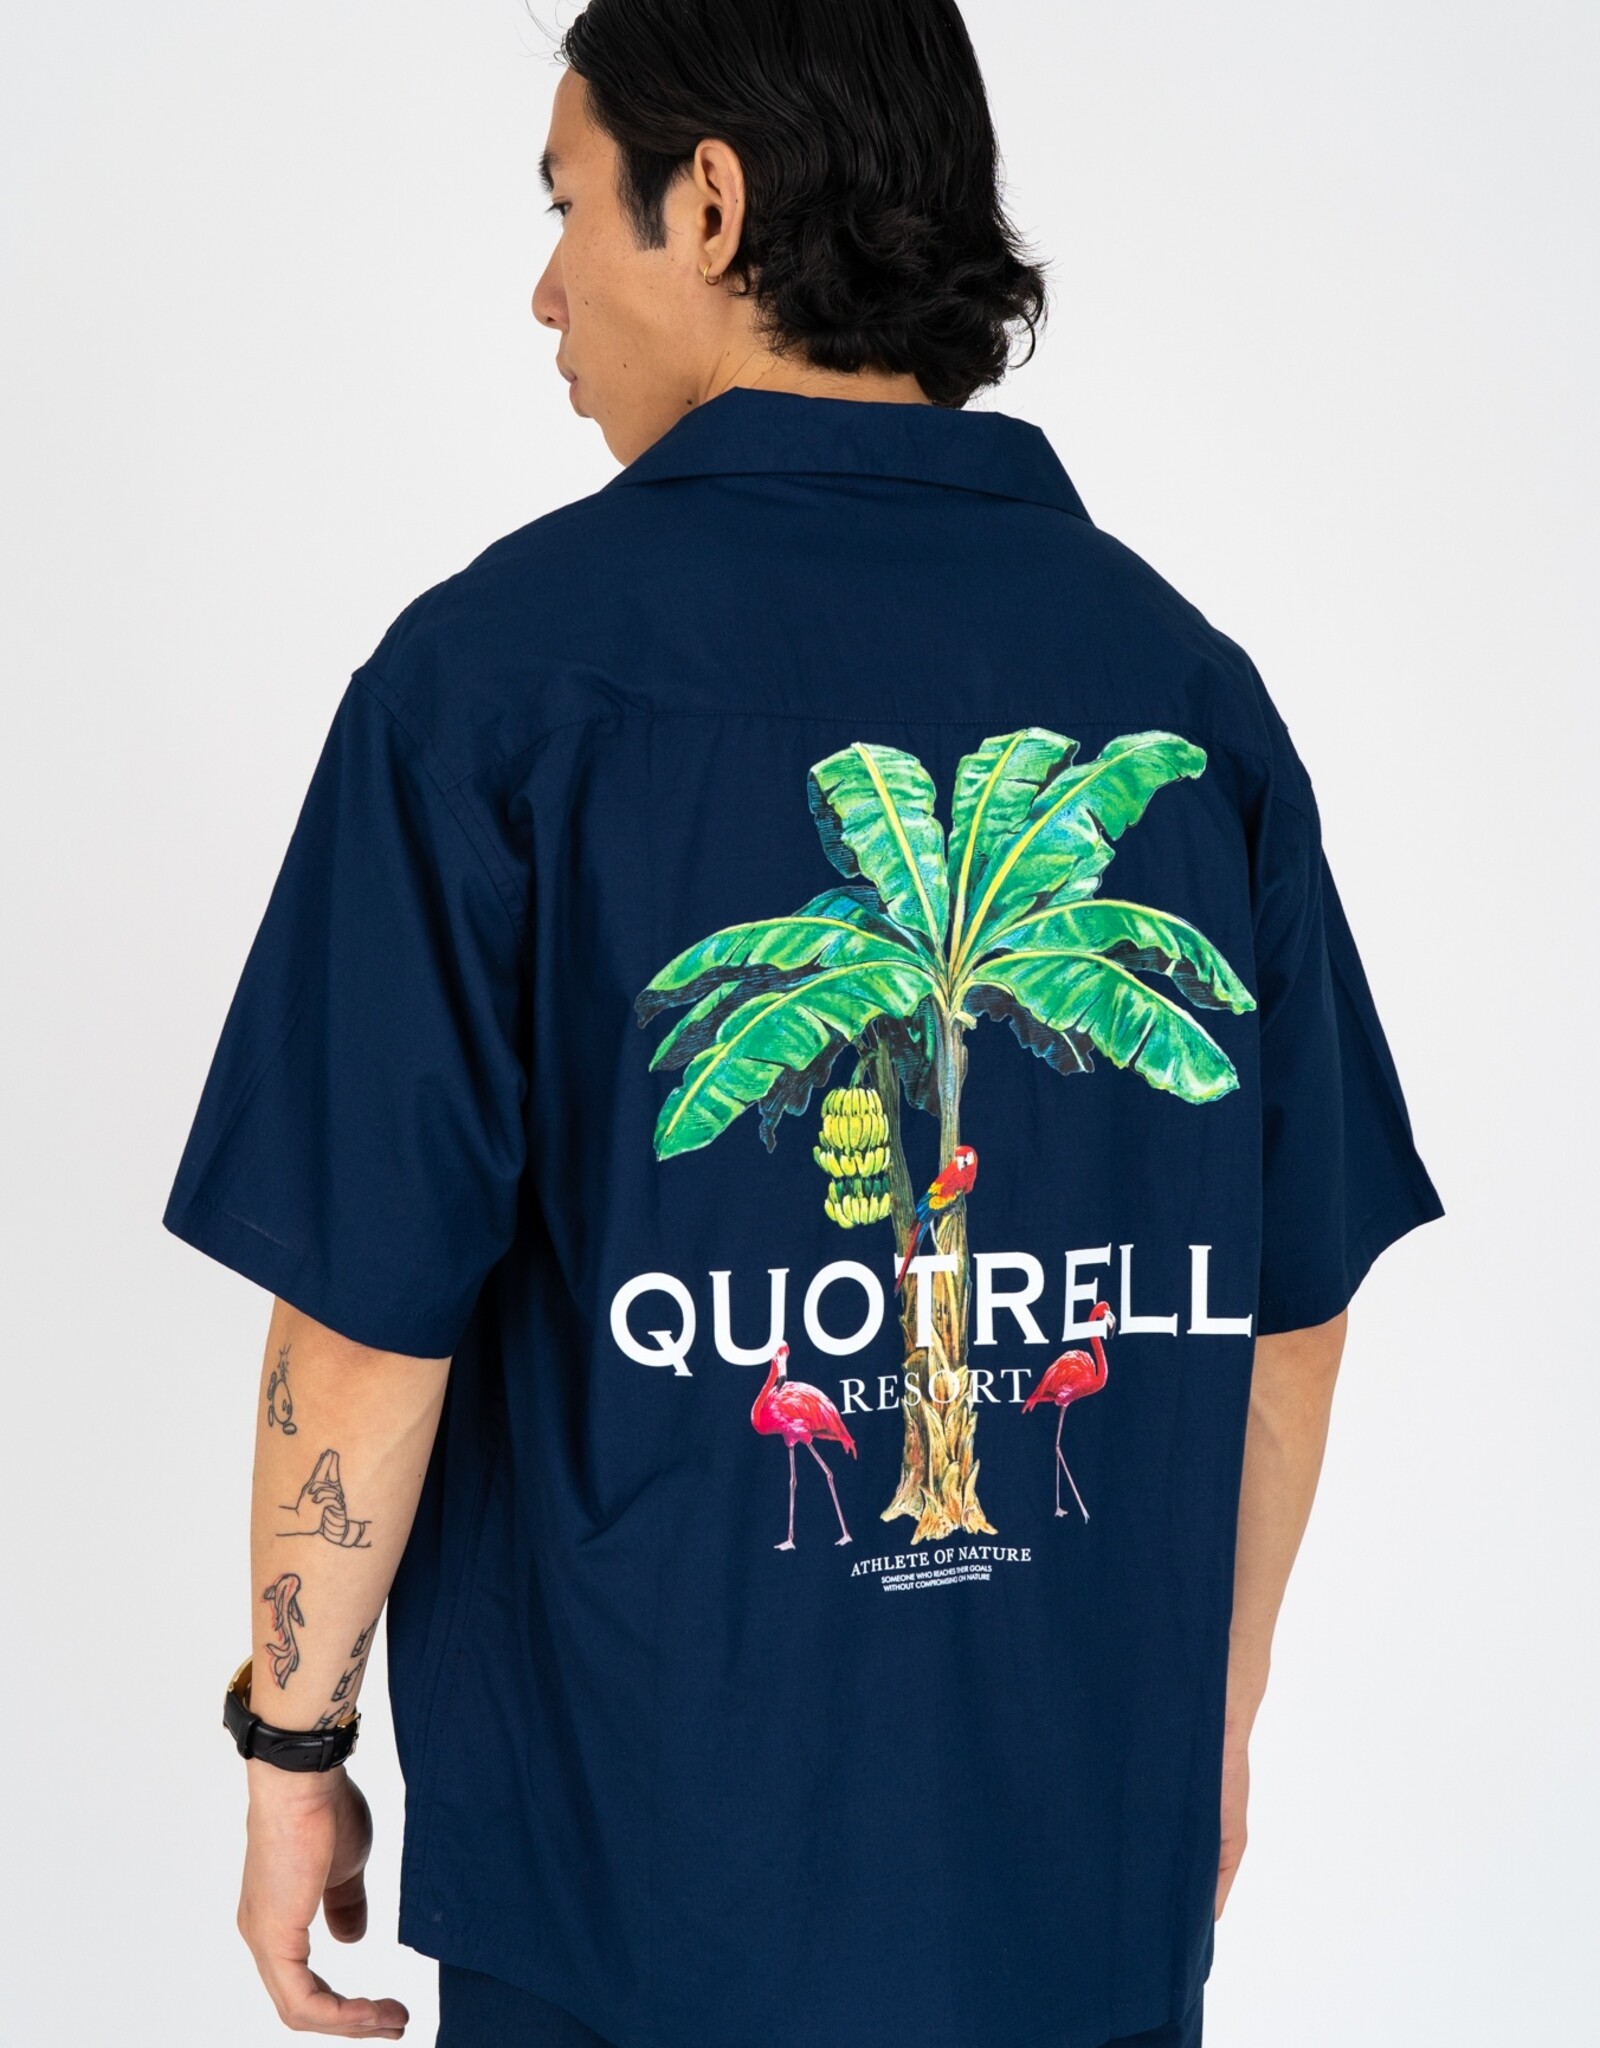 Quotrell Resort Shirt